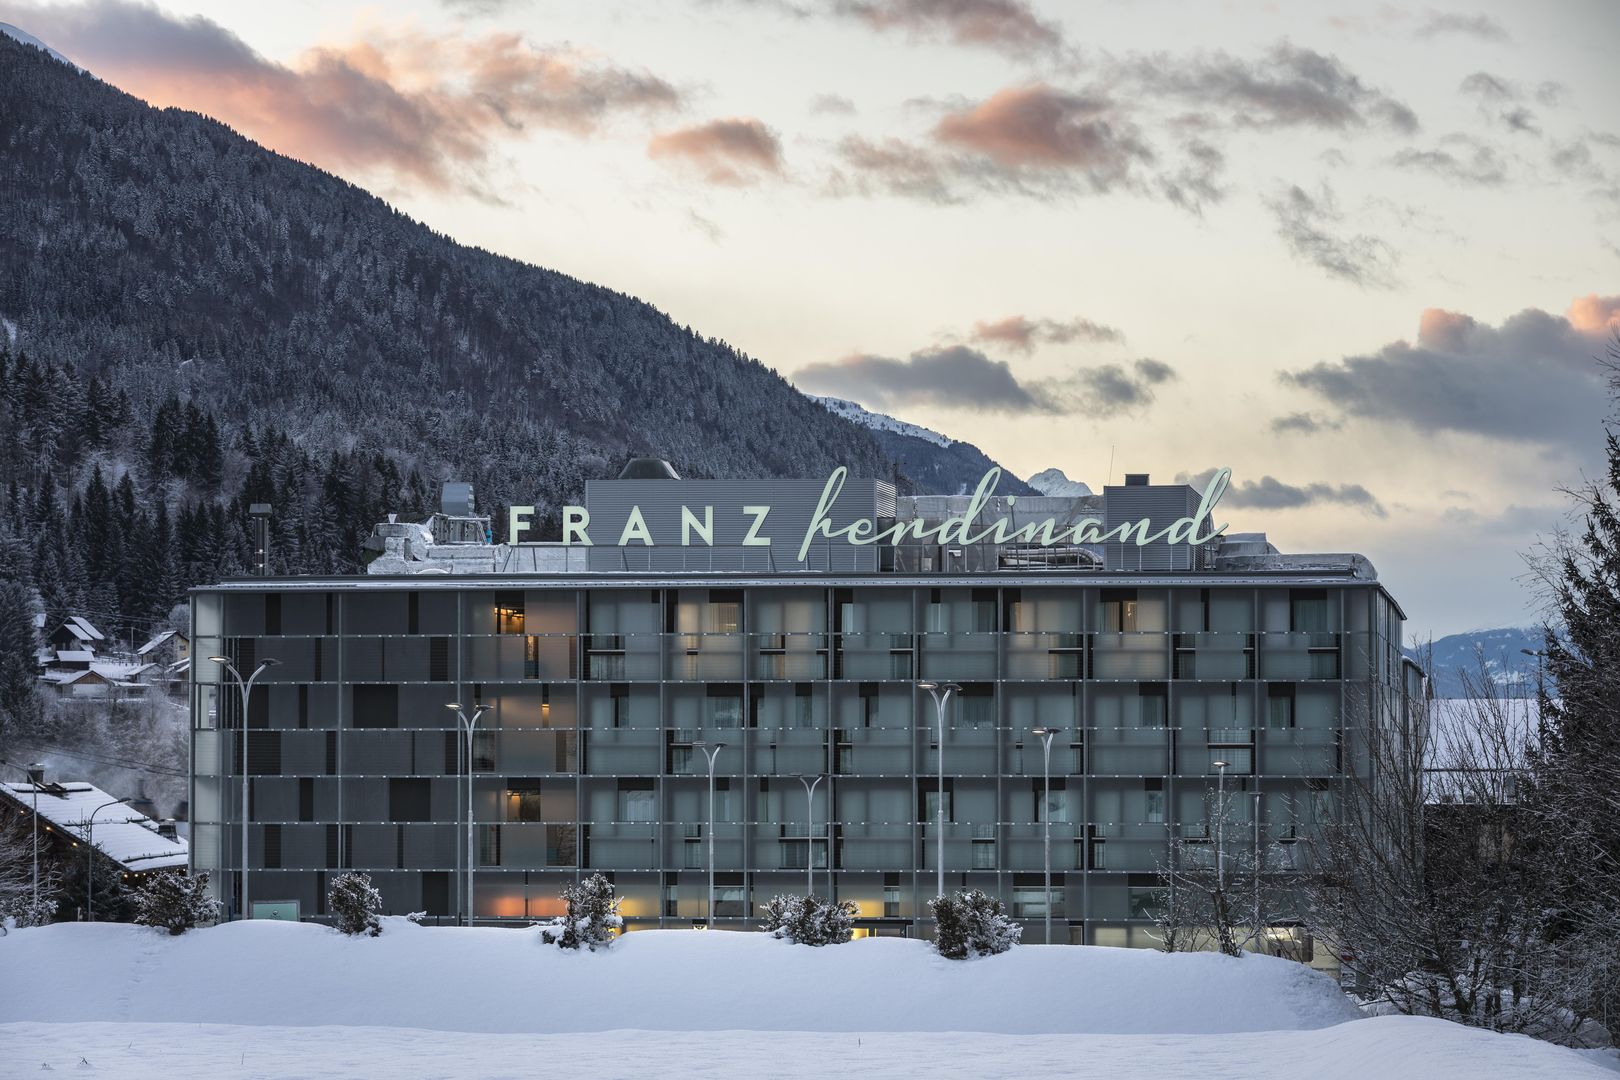 FRANZ ferdinand Mountain Resort Nassfeld - Slide 1